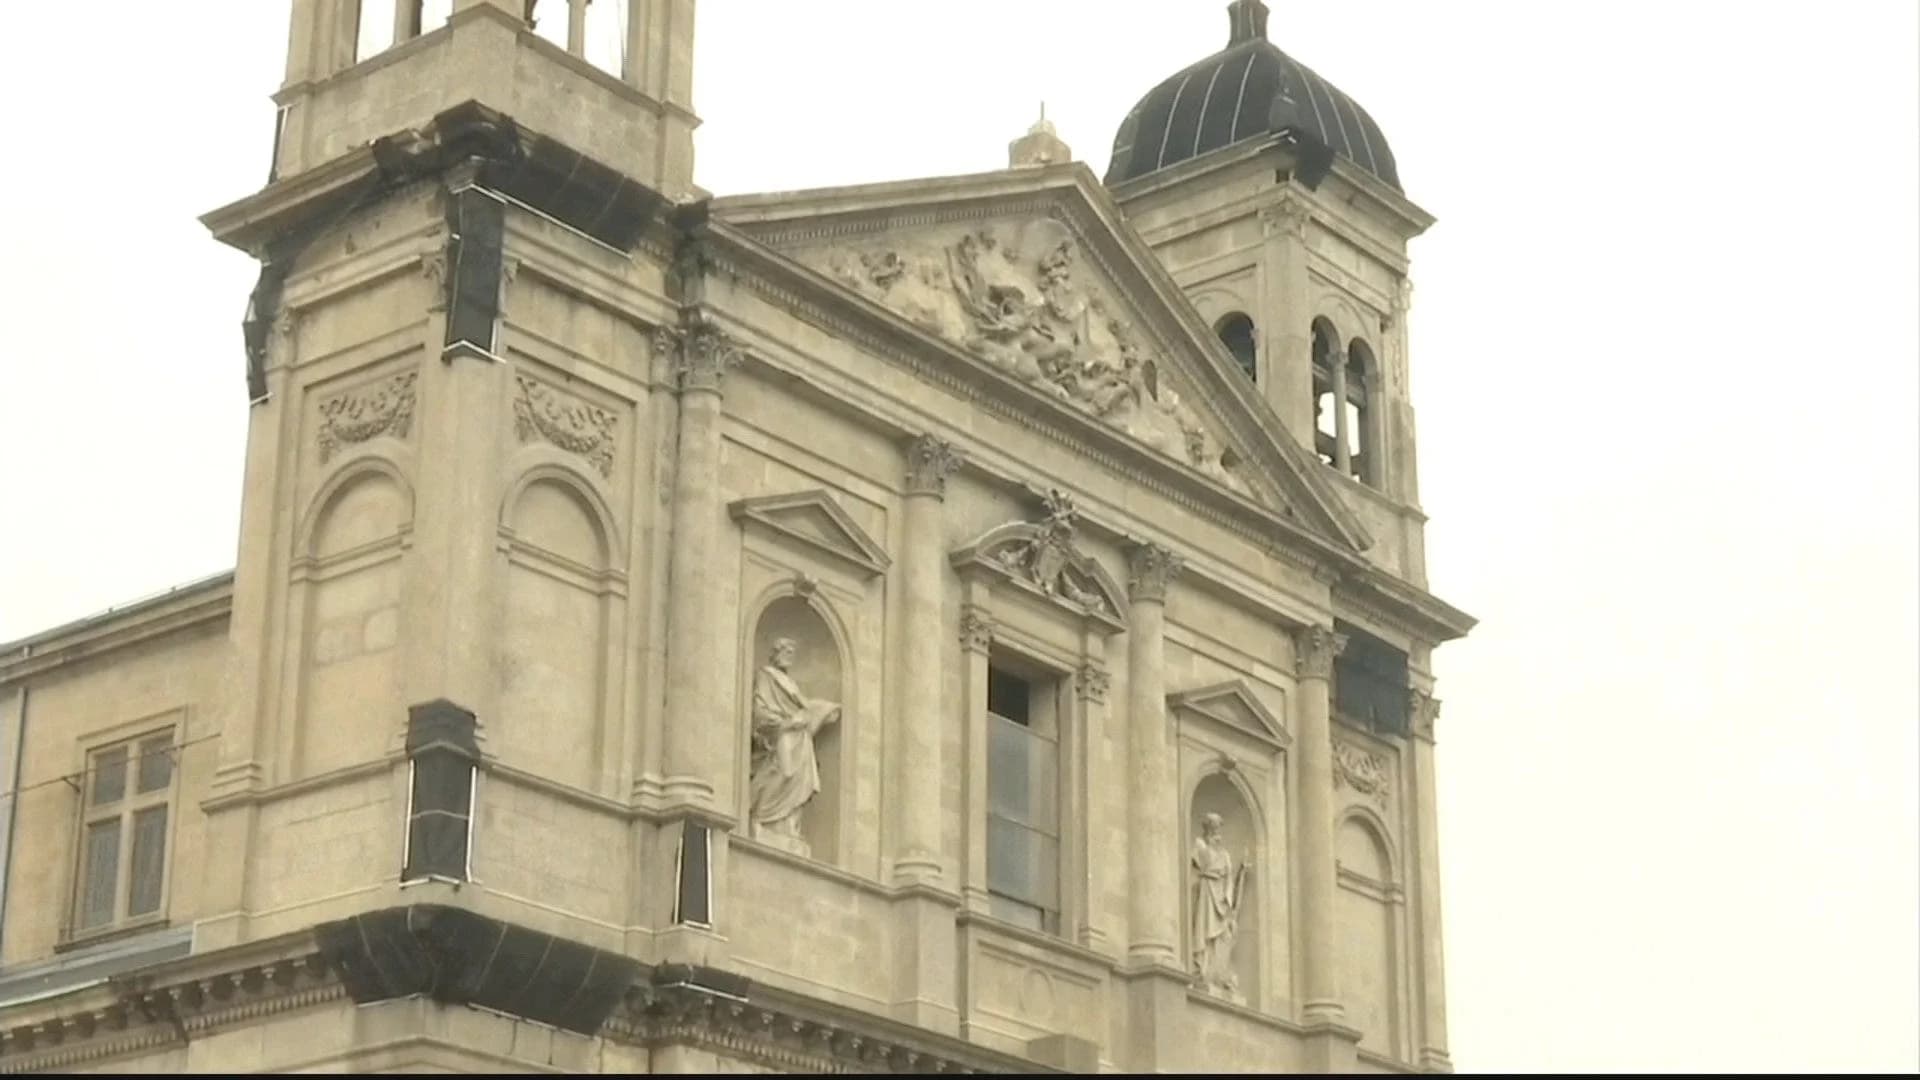 Judge deciding whether to extend halt on church demolition